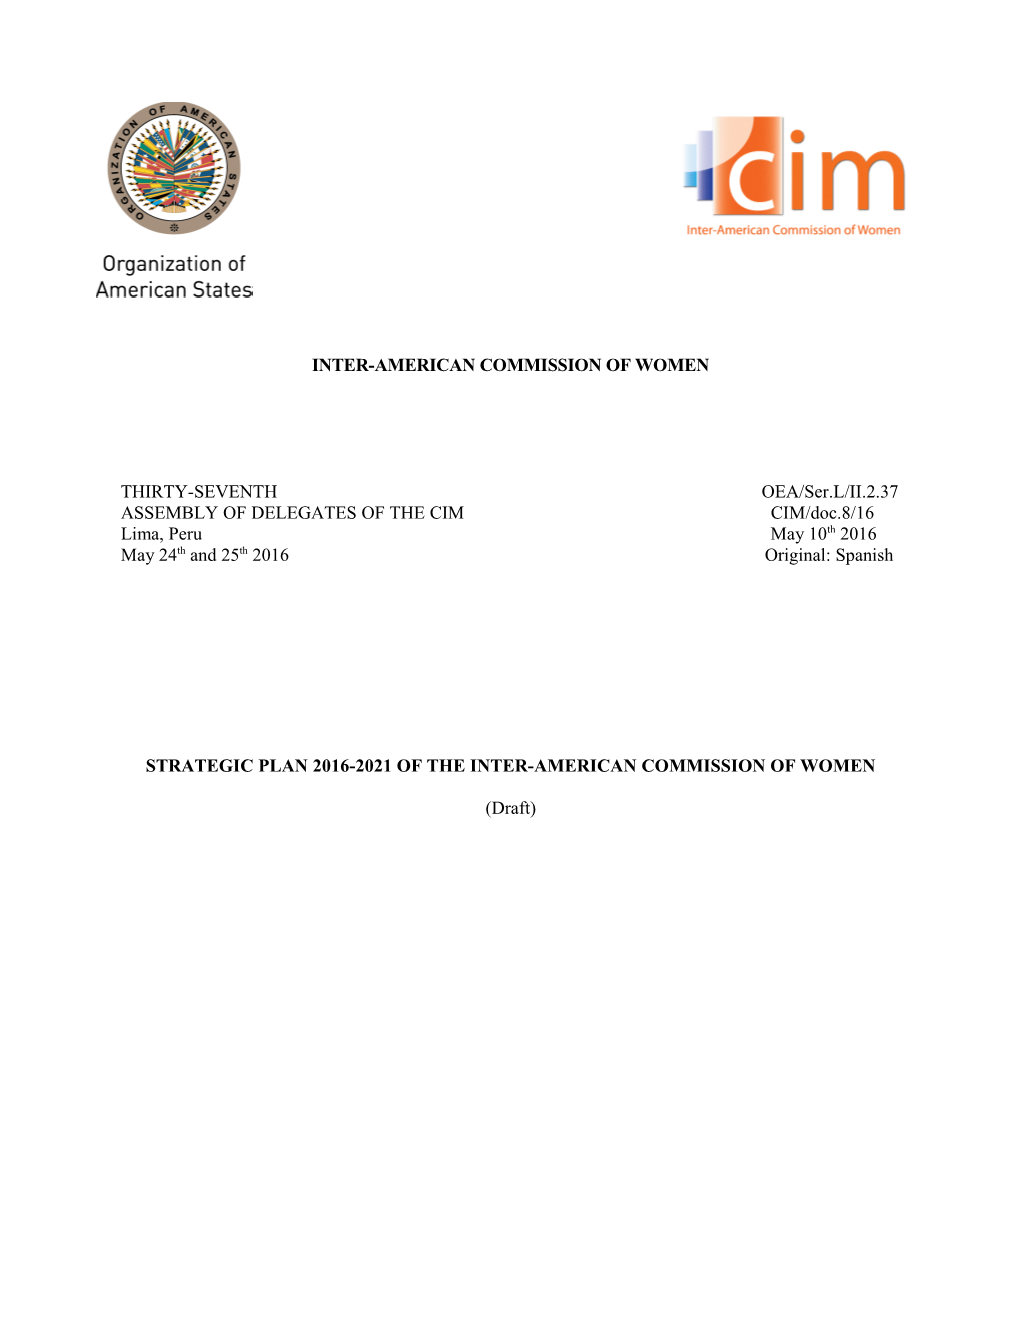 Inter-American Commission of Women (CIM) Strategic Plan 2016-2021